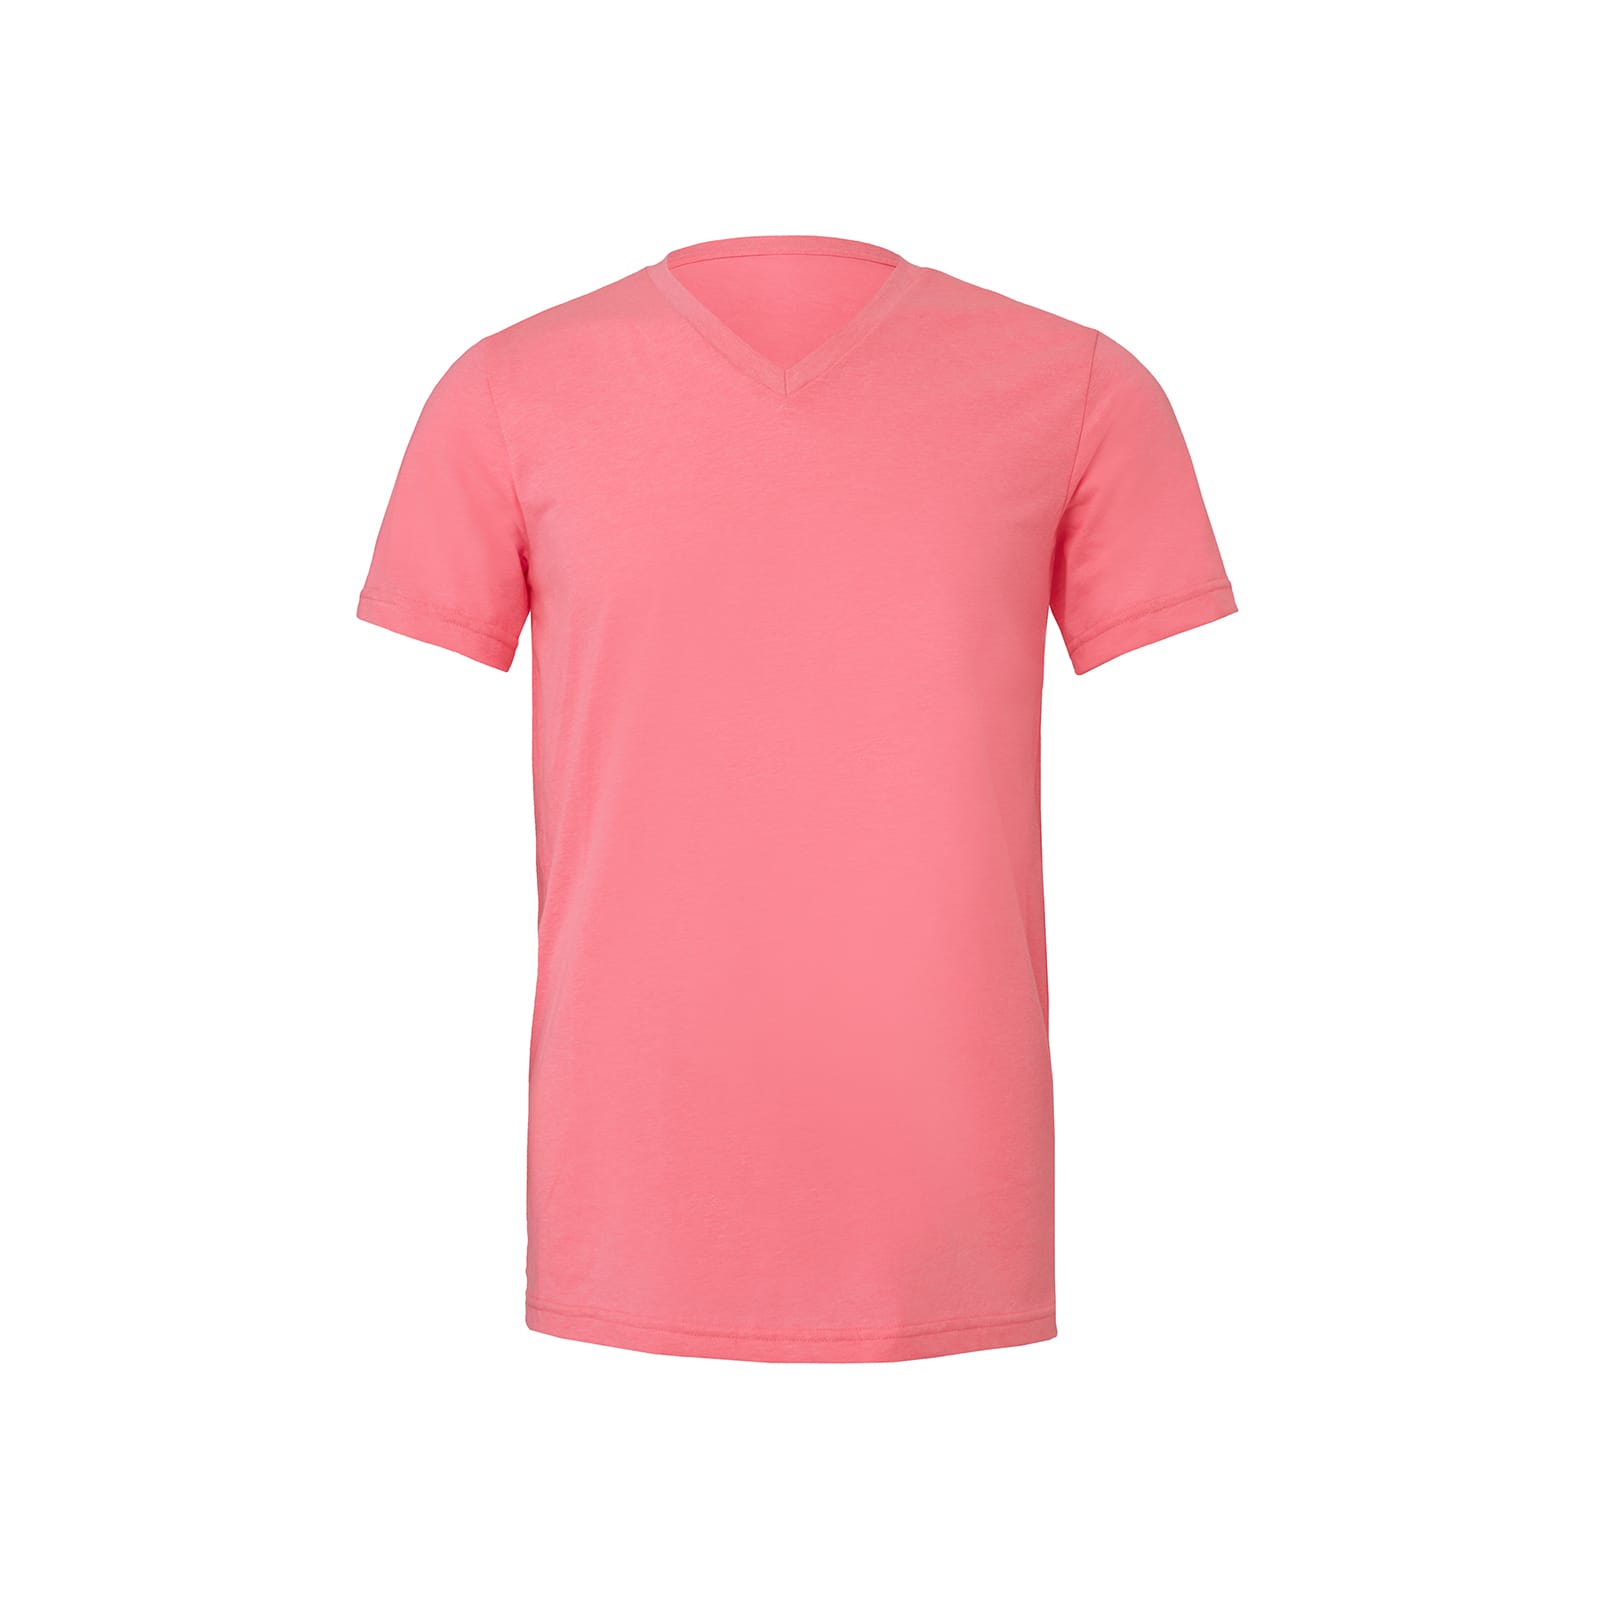 6 Light Pink Adult's T-Shirts